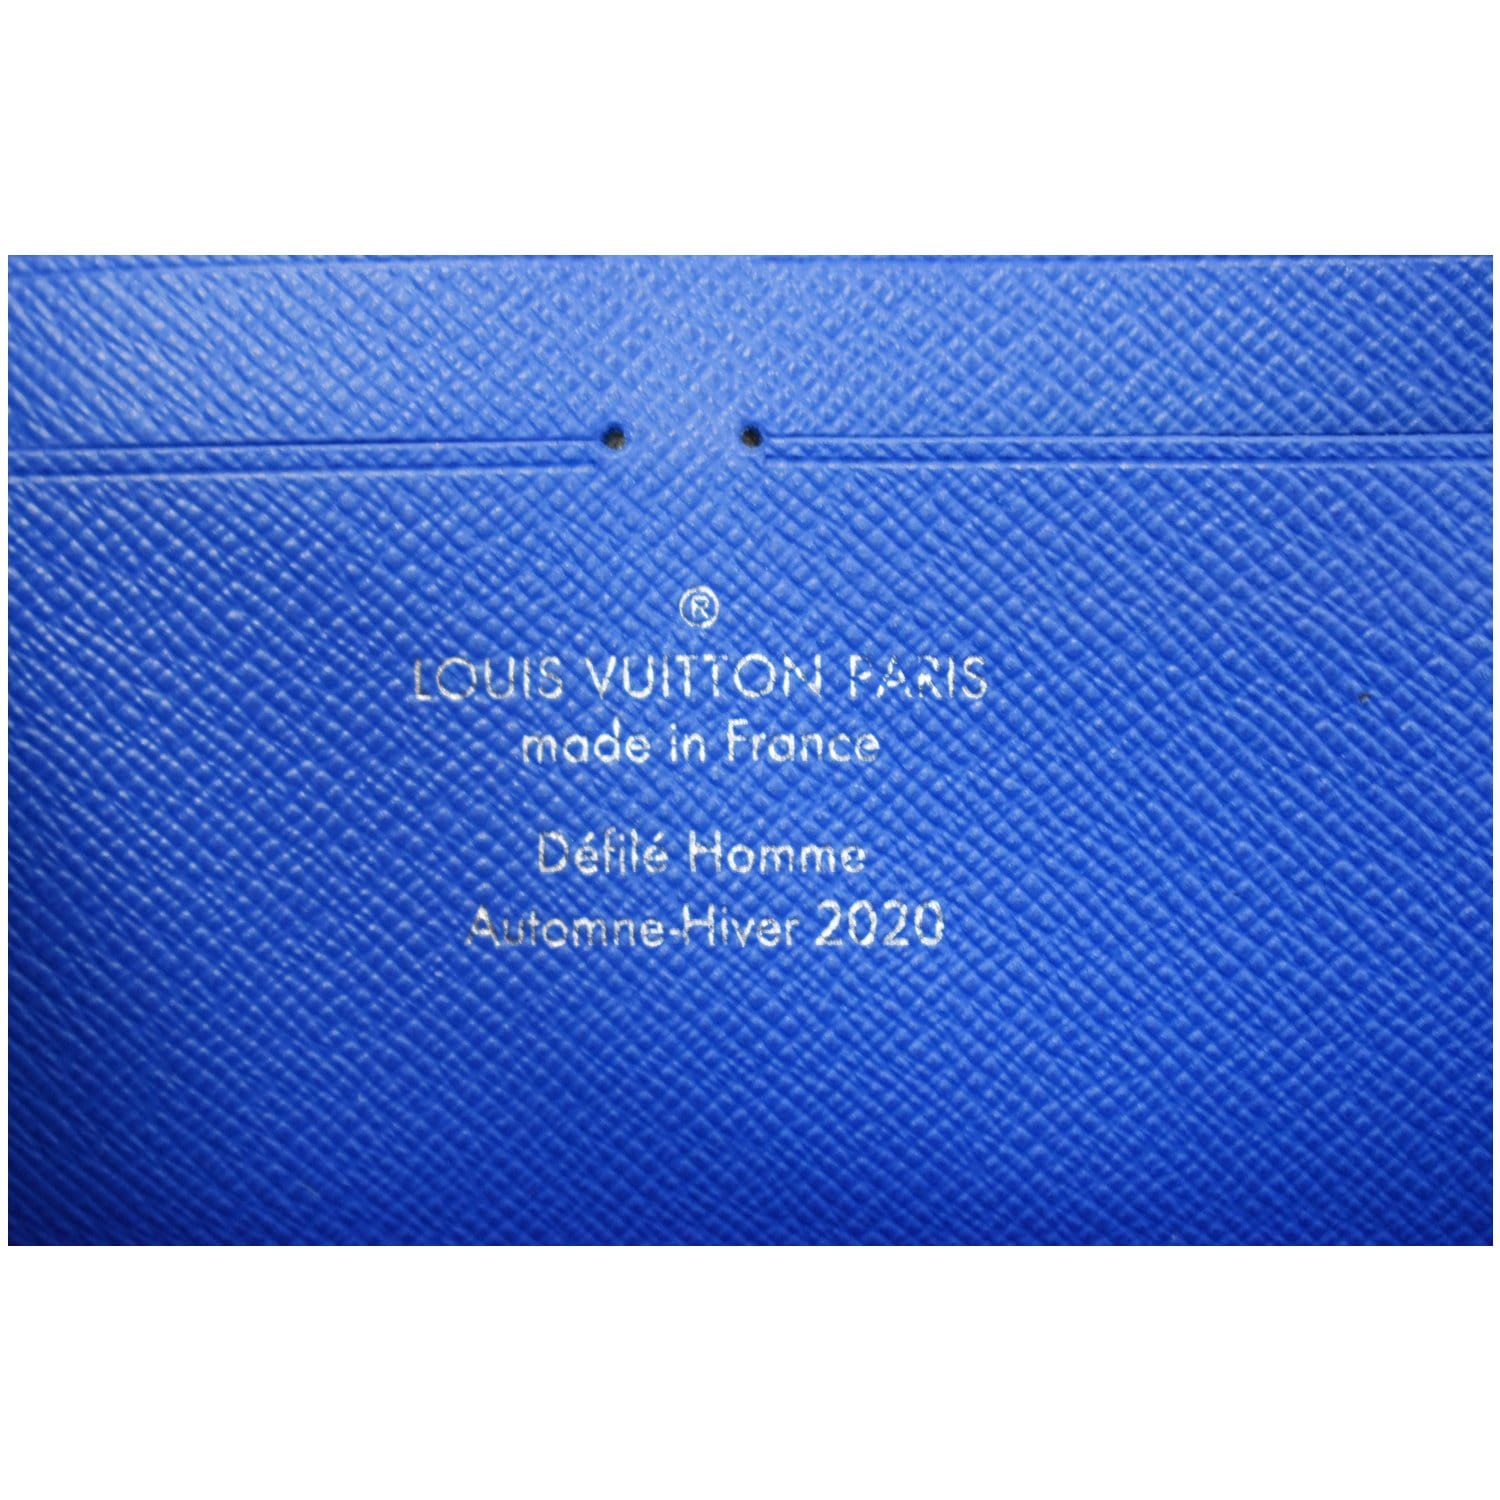 Louis Vuitton Slender Wallet Clouds